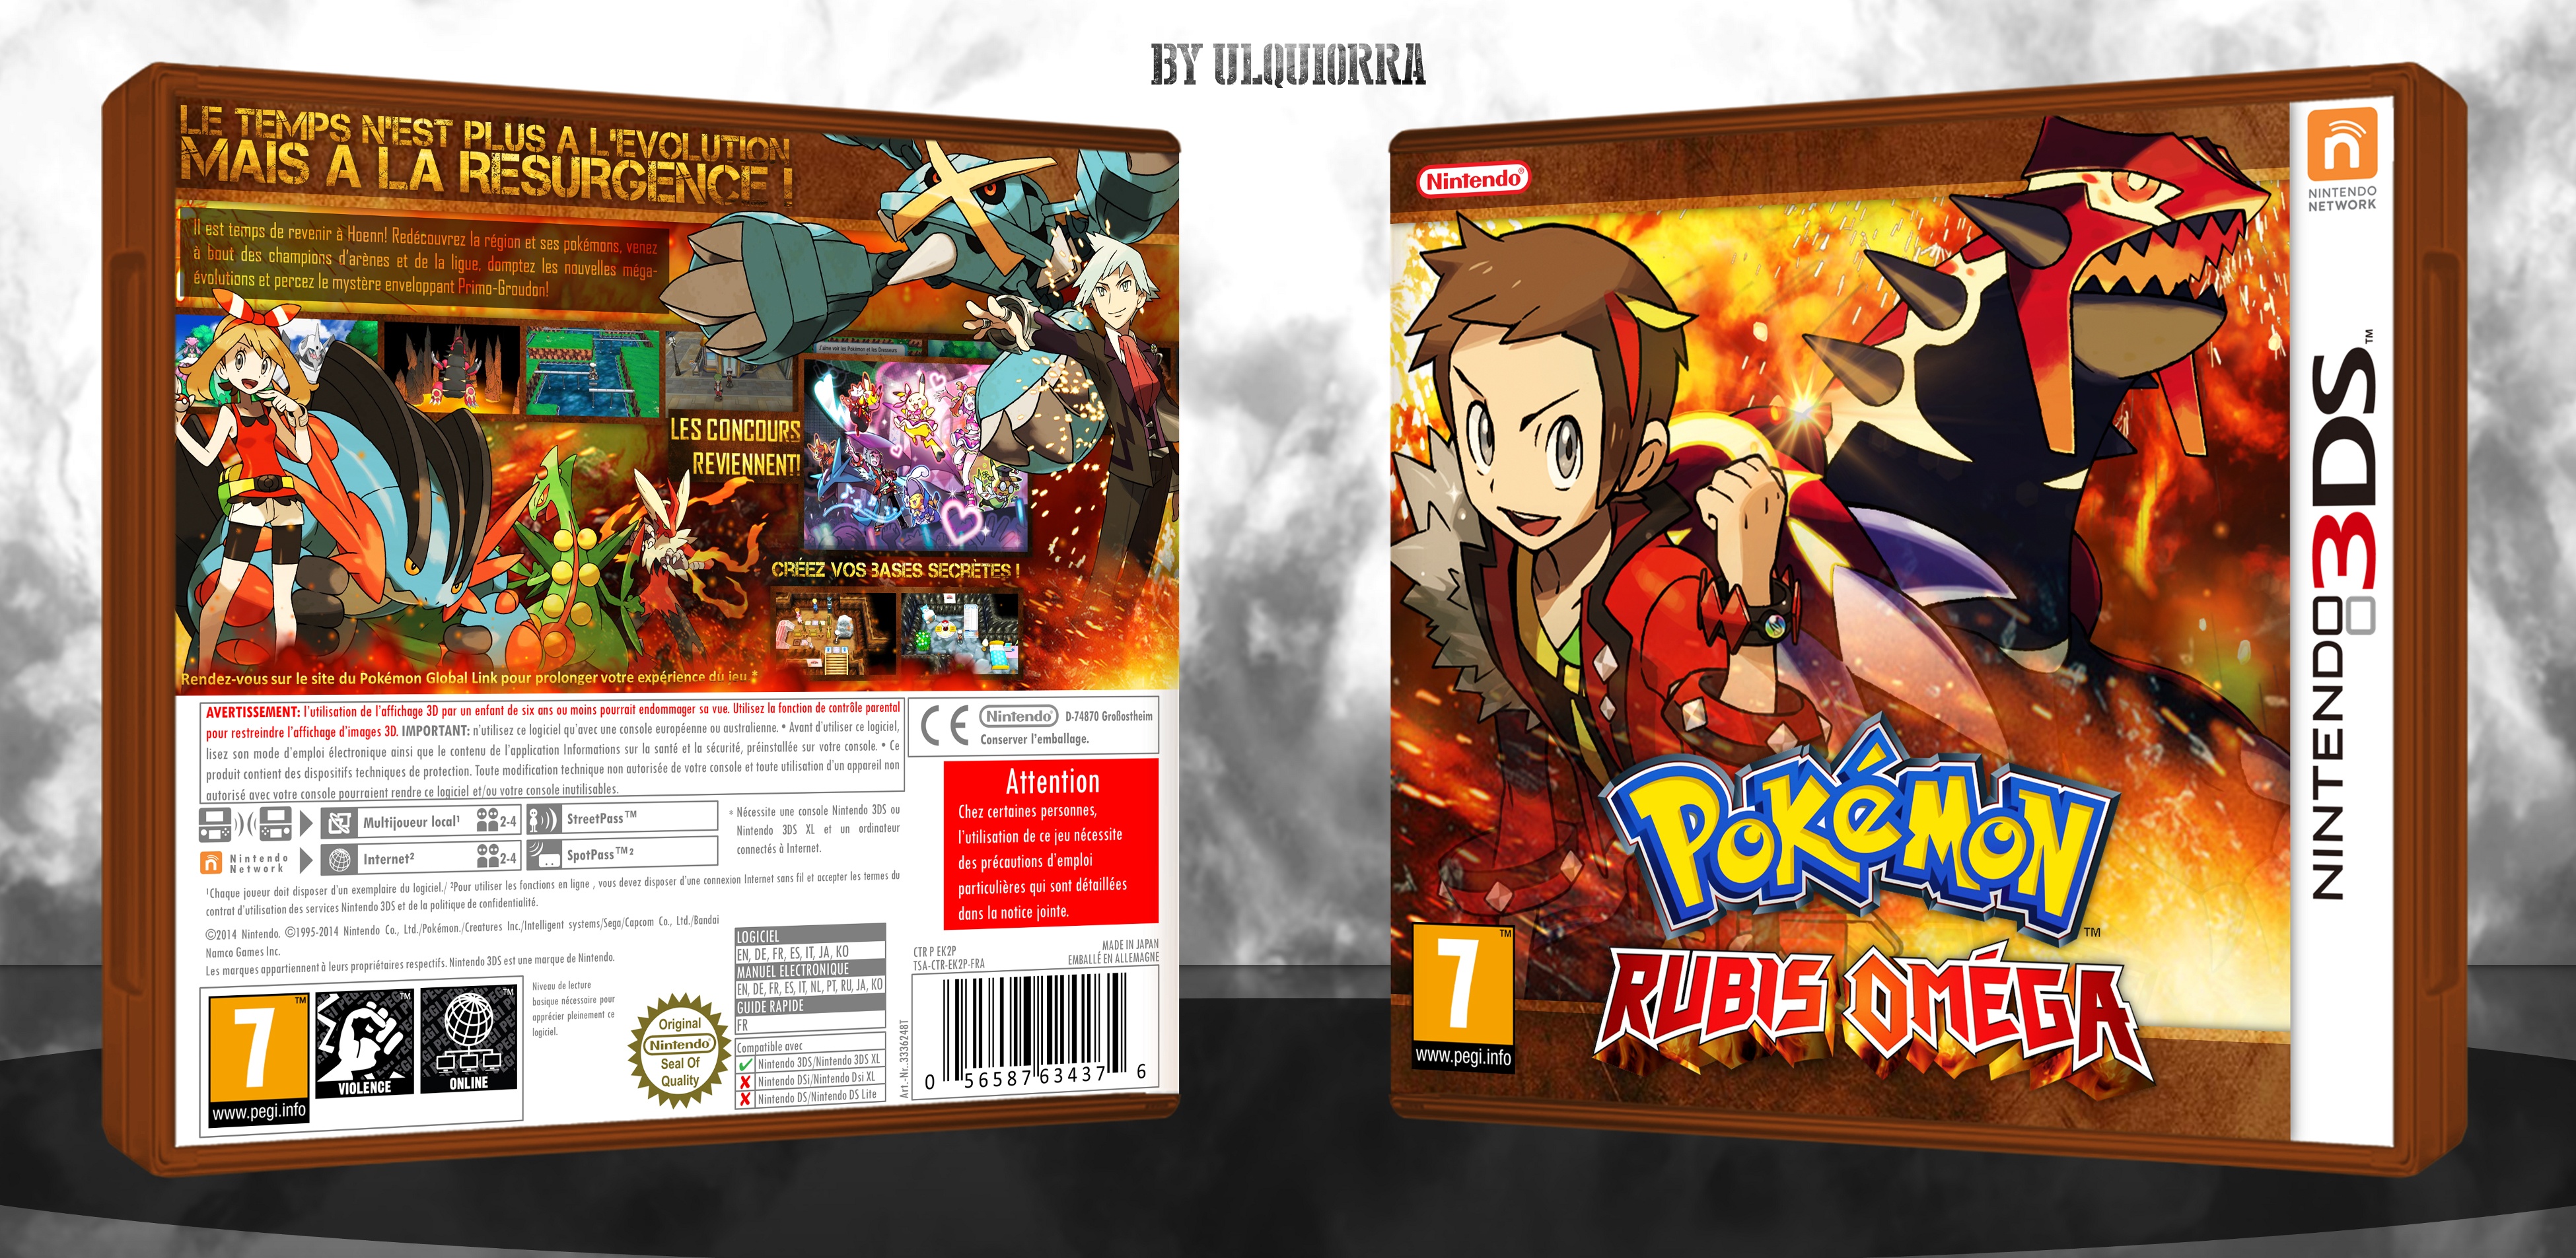 Pokemon Omega Ruby box cover